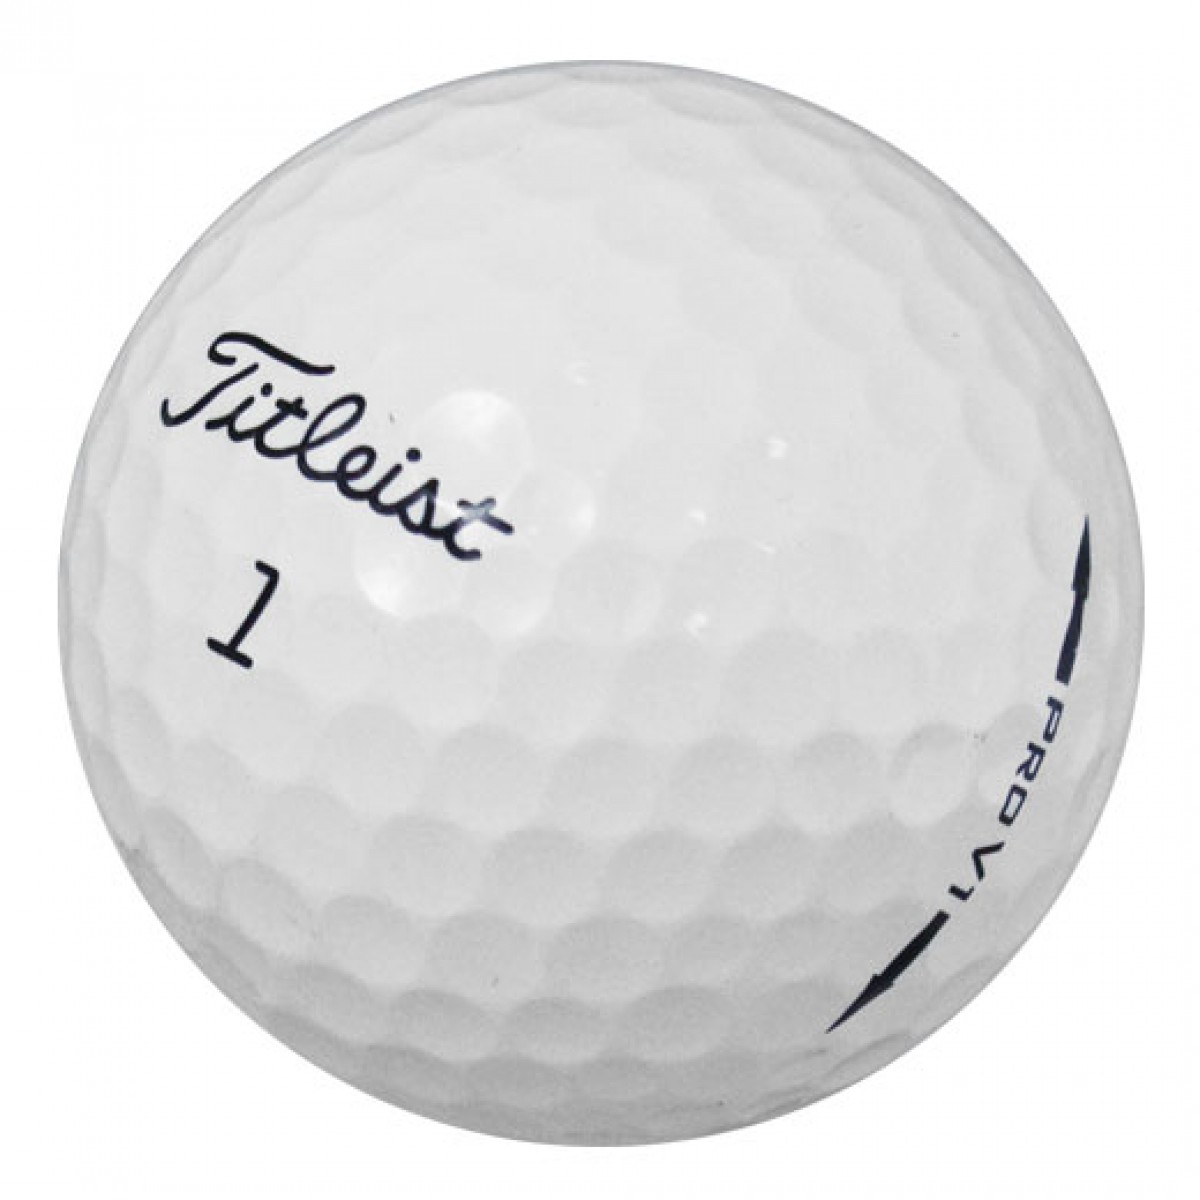 Titleist Pro V1 Mix used golf balls